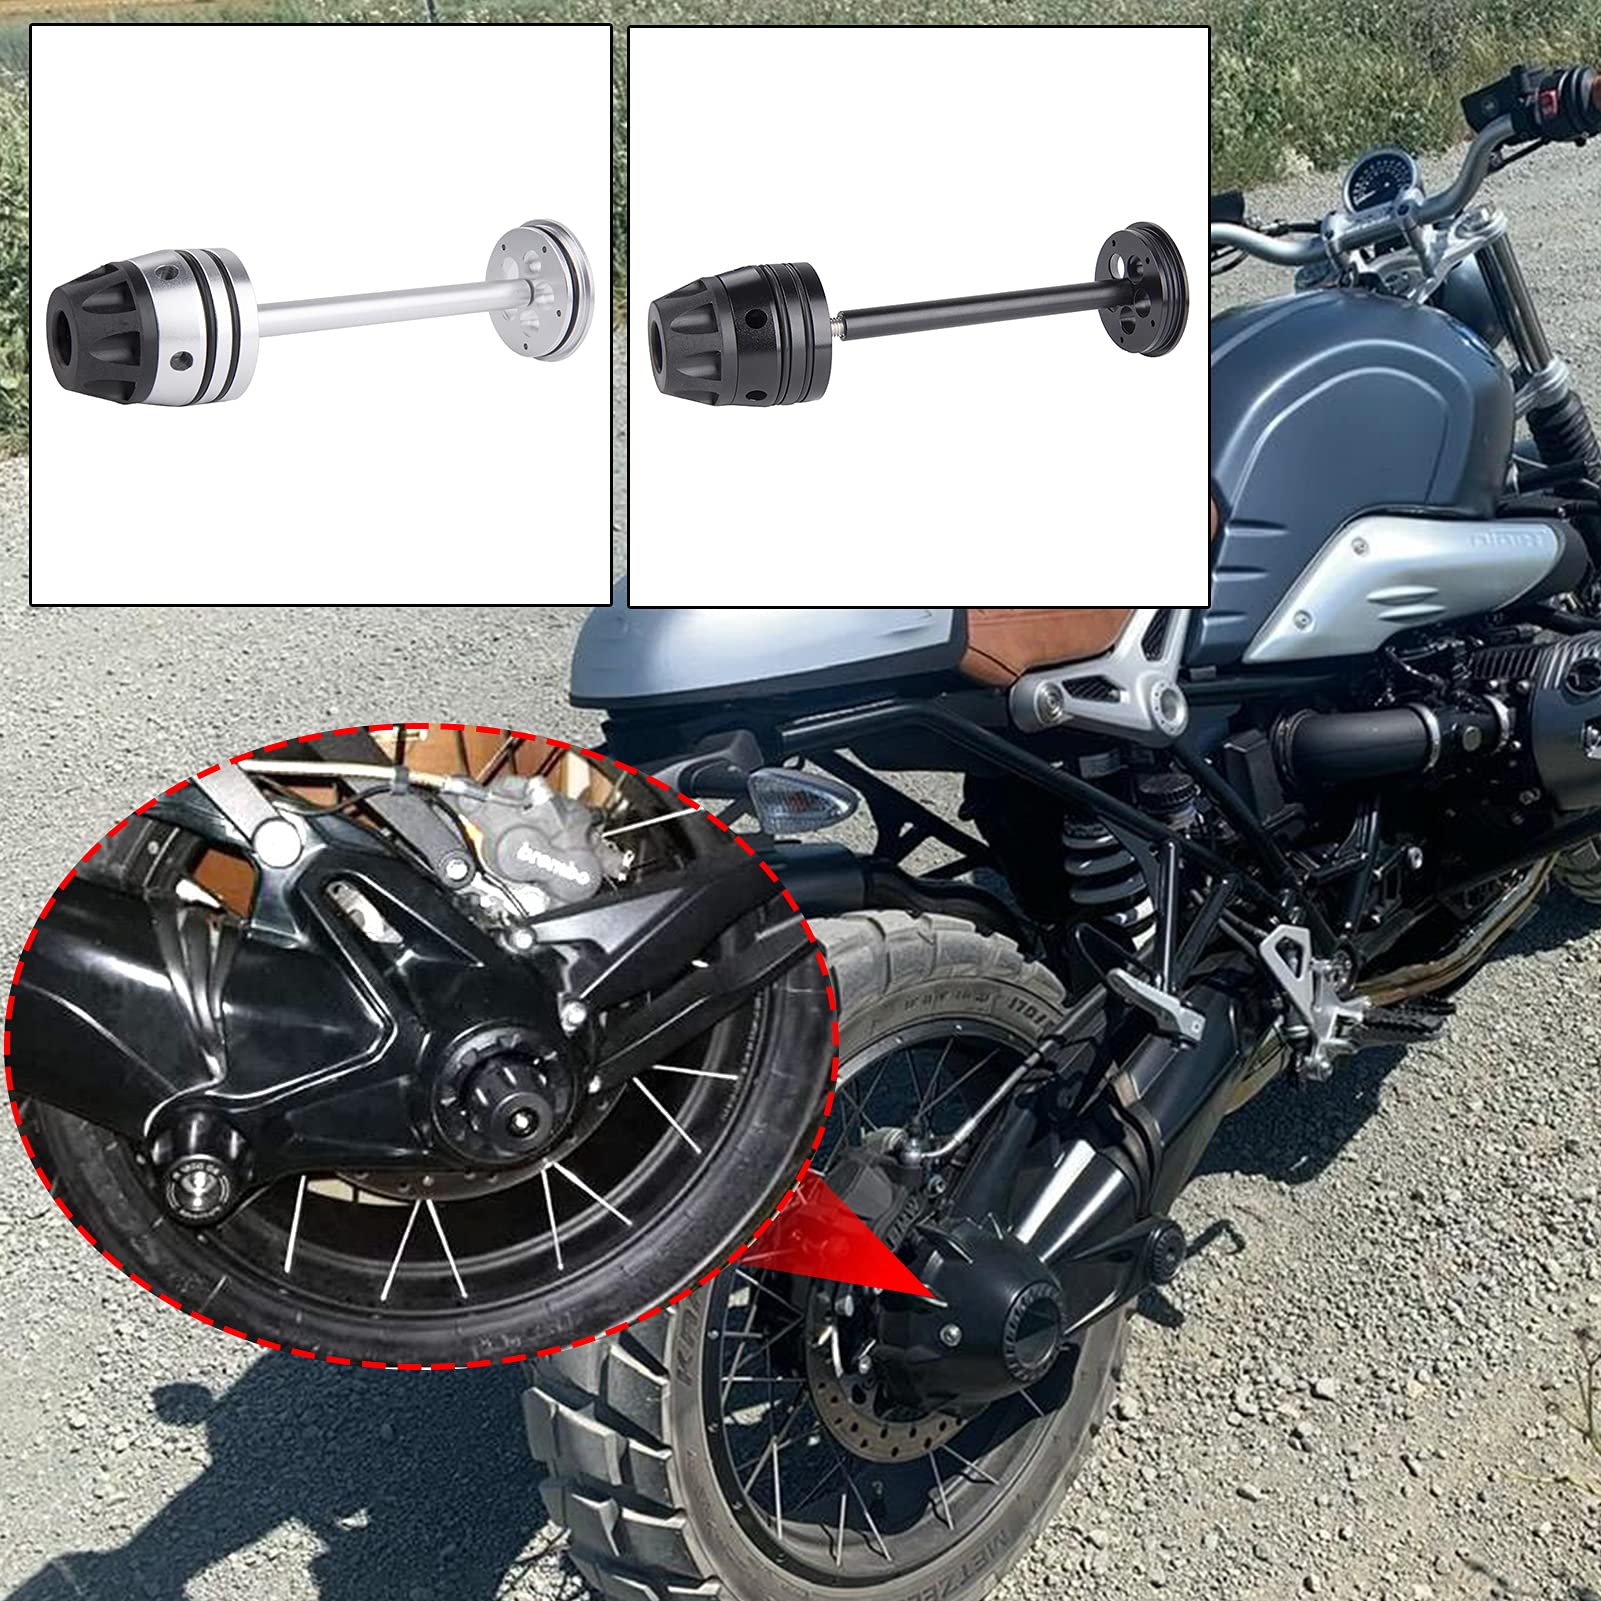 Motorrad R1250GS hinten Refit Rad Gabel Achse Sliders Cap Pad Crash Protector for R1200GS 2007-2012 RnineT 2014-2018 (Silber) von XX eCommerce